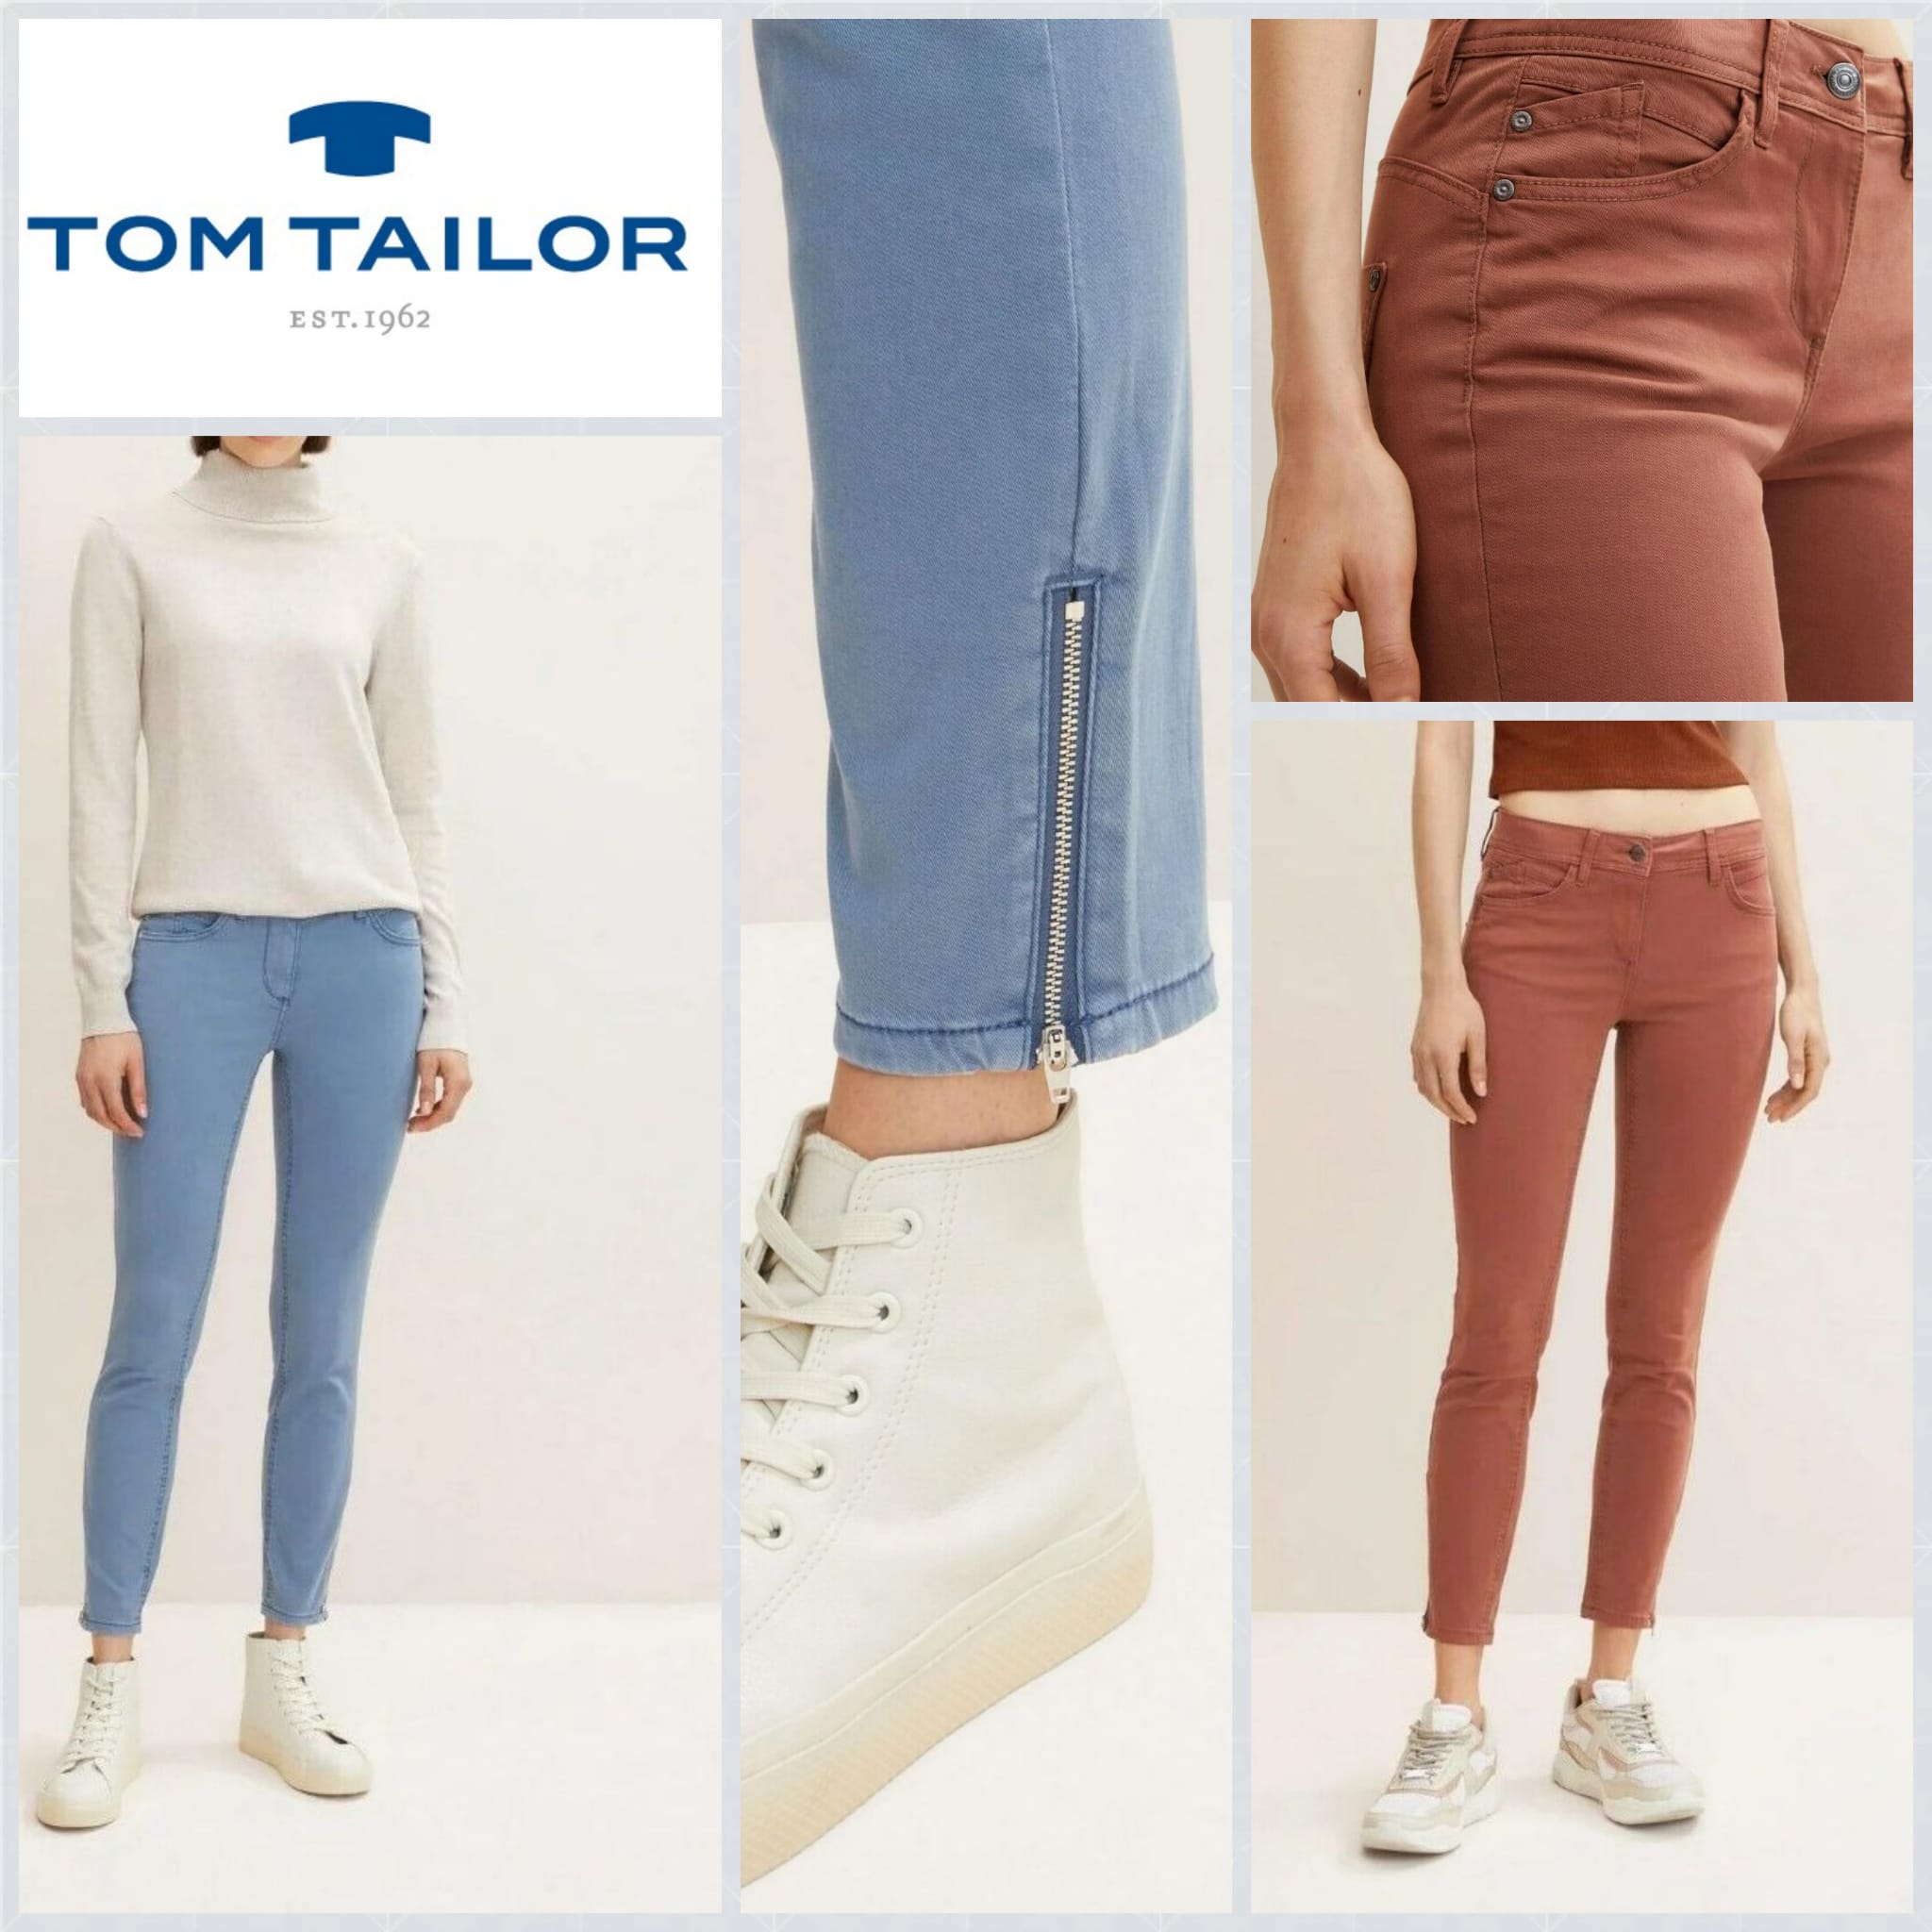 Tom Tailor women's jeans